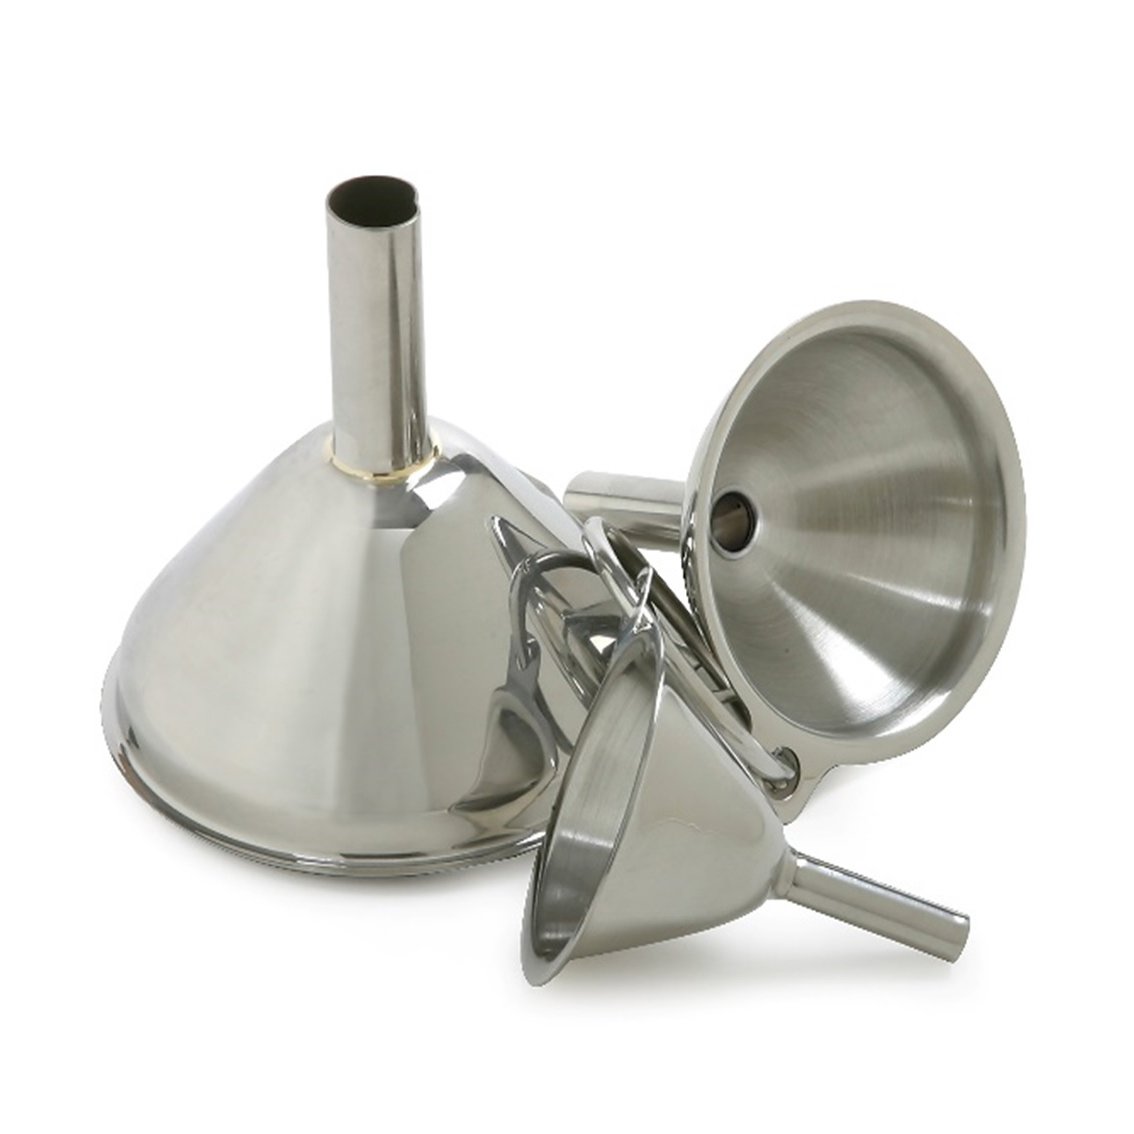 Norpro Stainless Steel Funnel Set - Shop Utensils & Gadgets at H-E-B